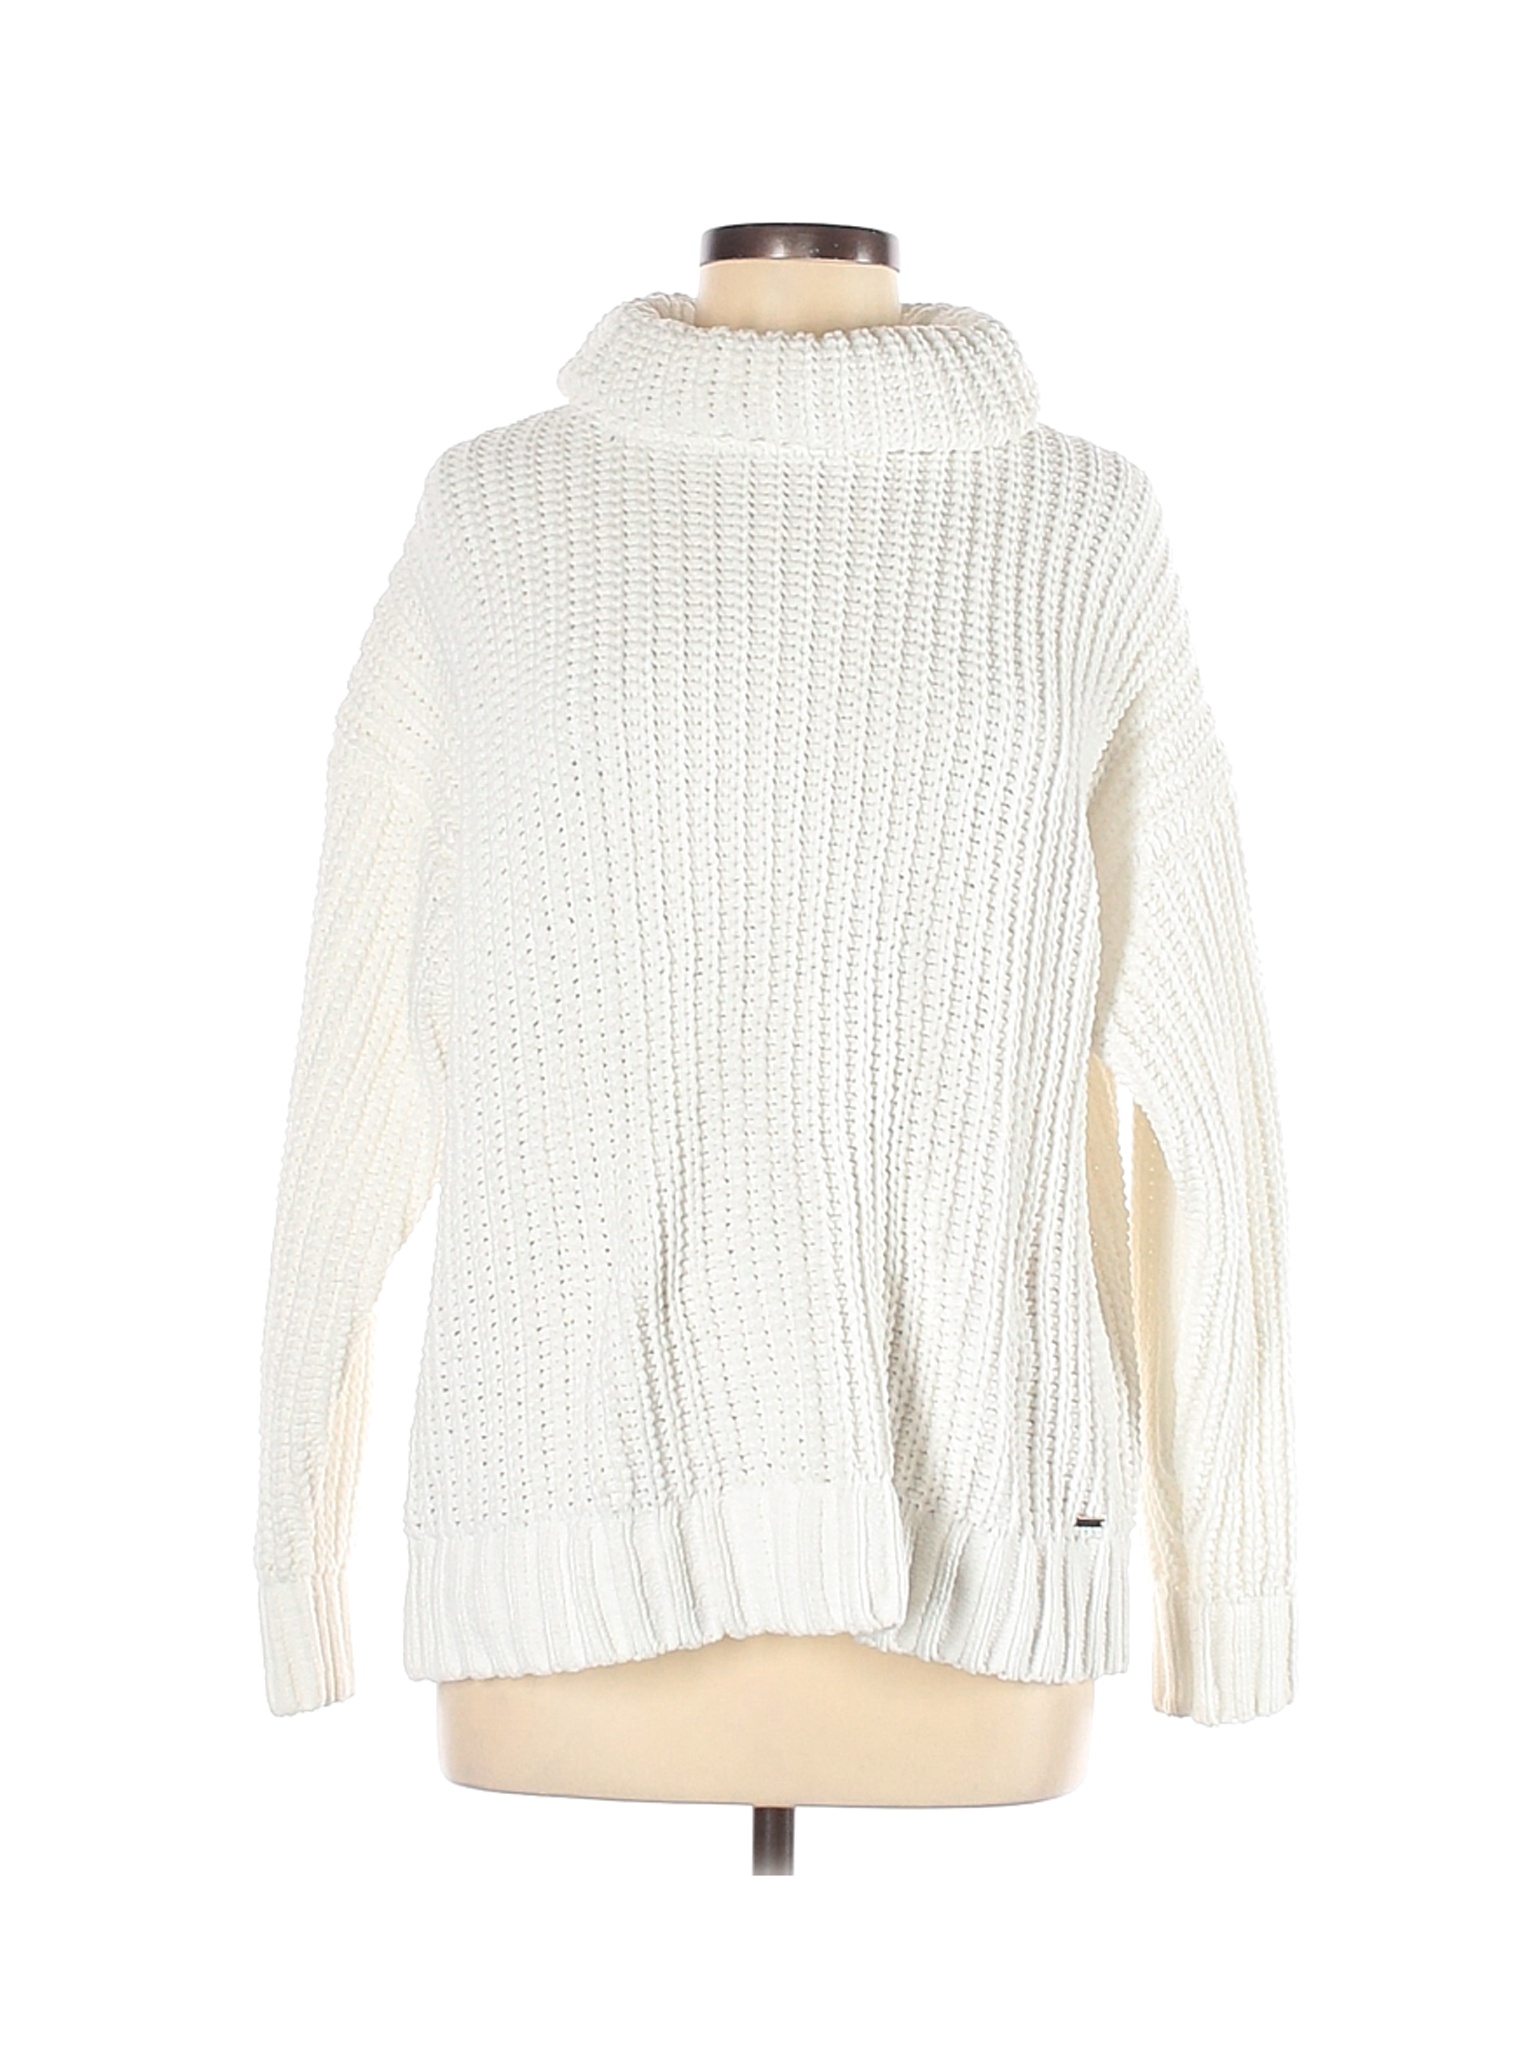 Hollister Women White Turtleneck Sweater S | eBay